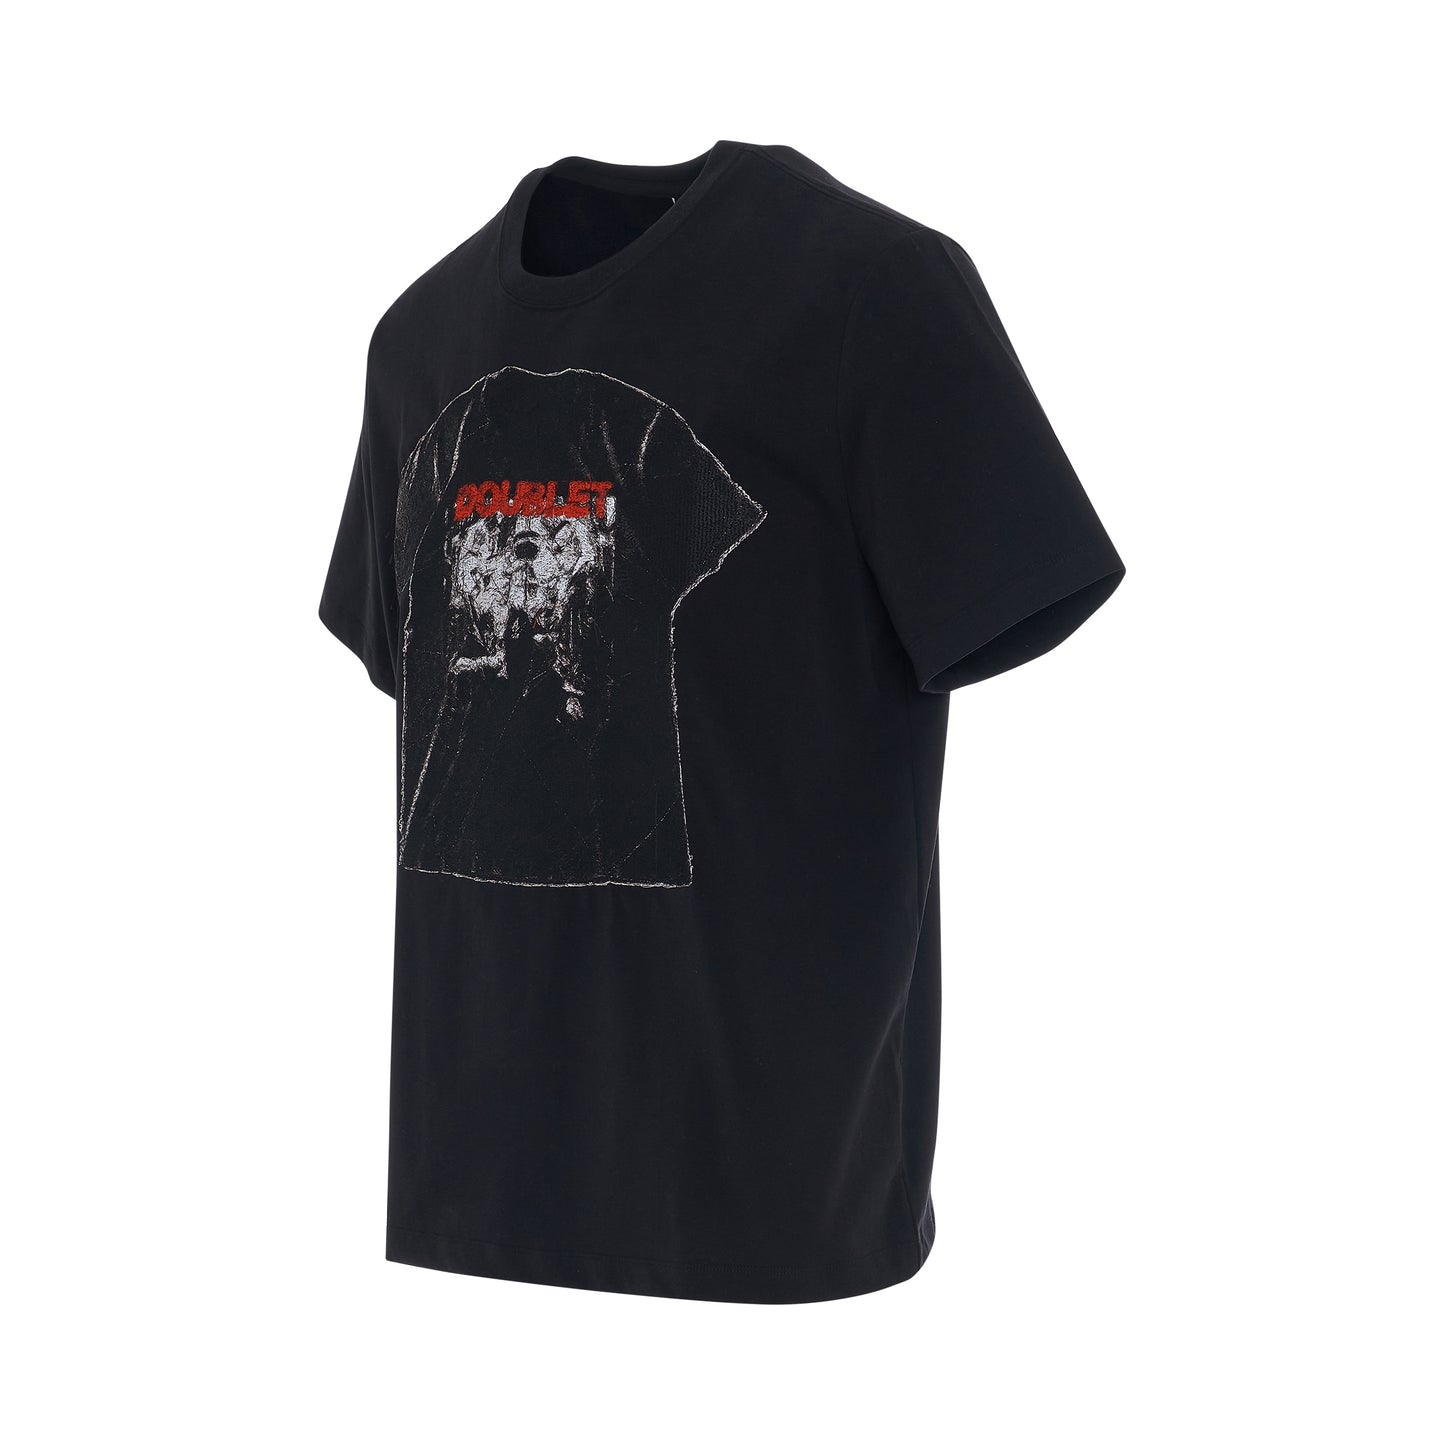 Photo Stitch T-Shirt in Black